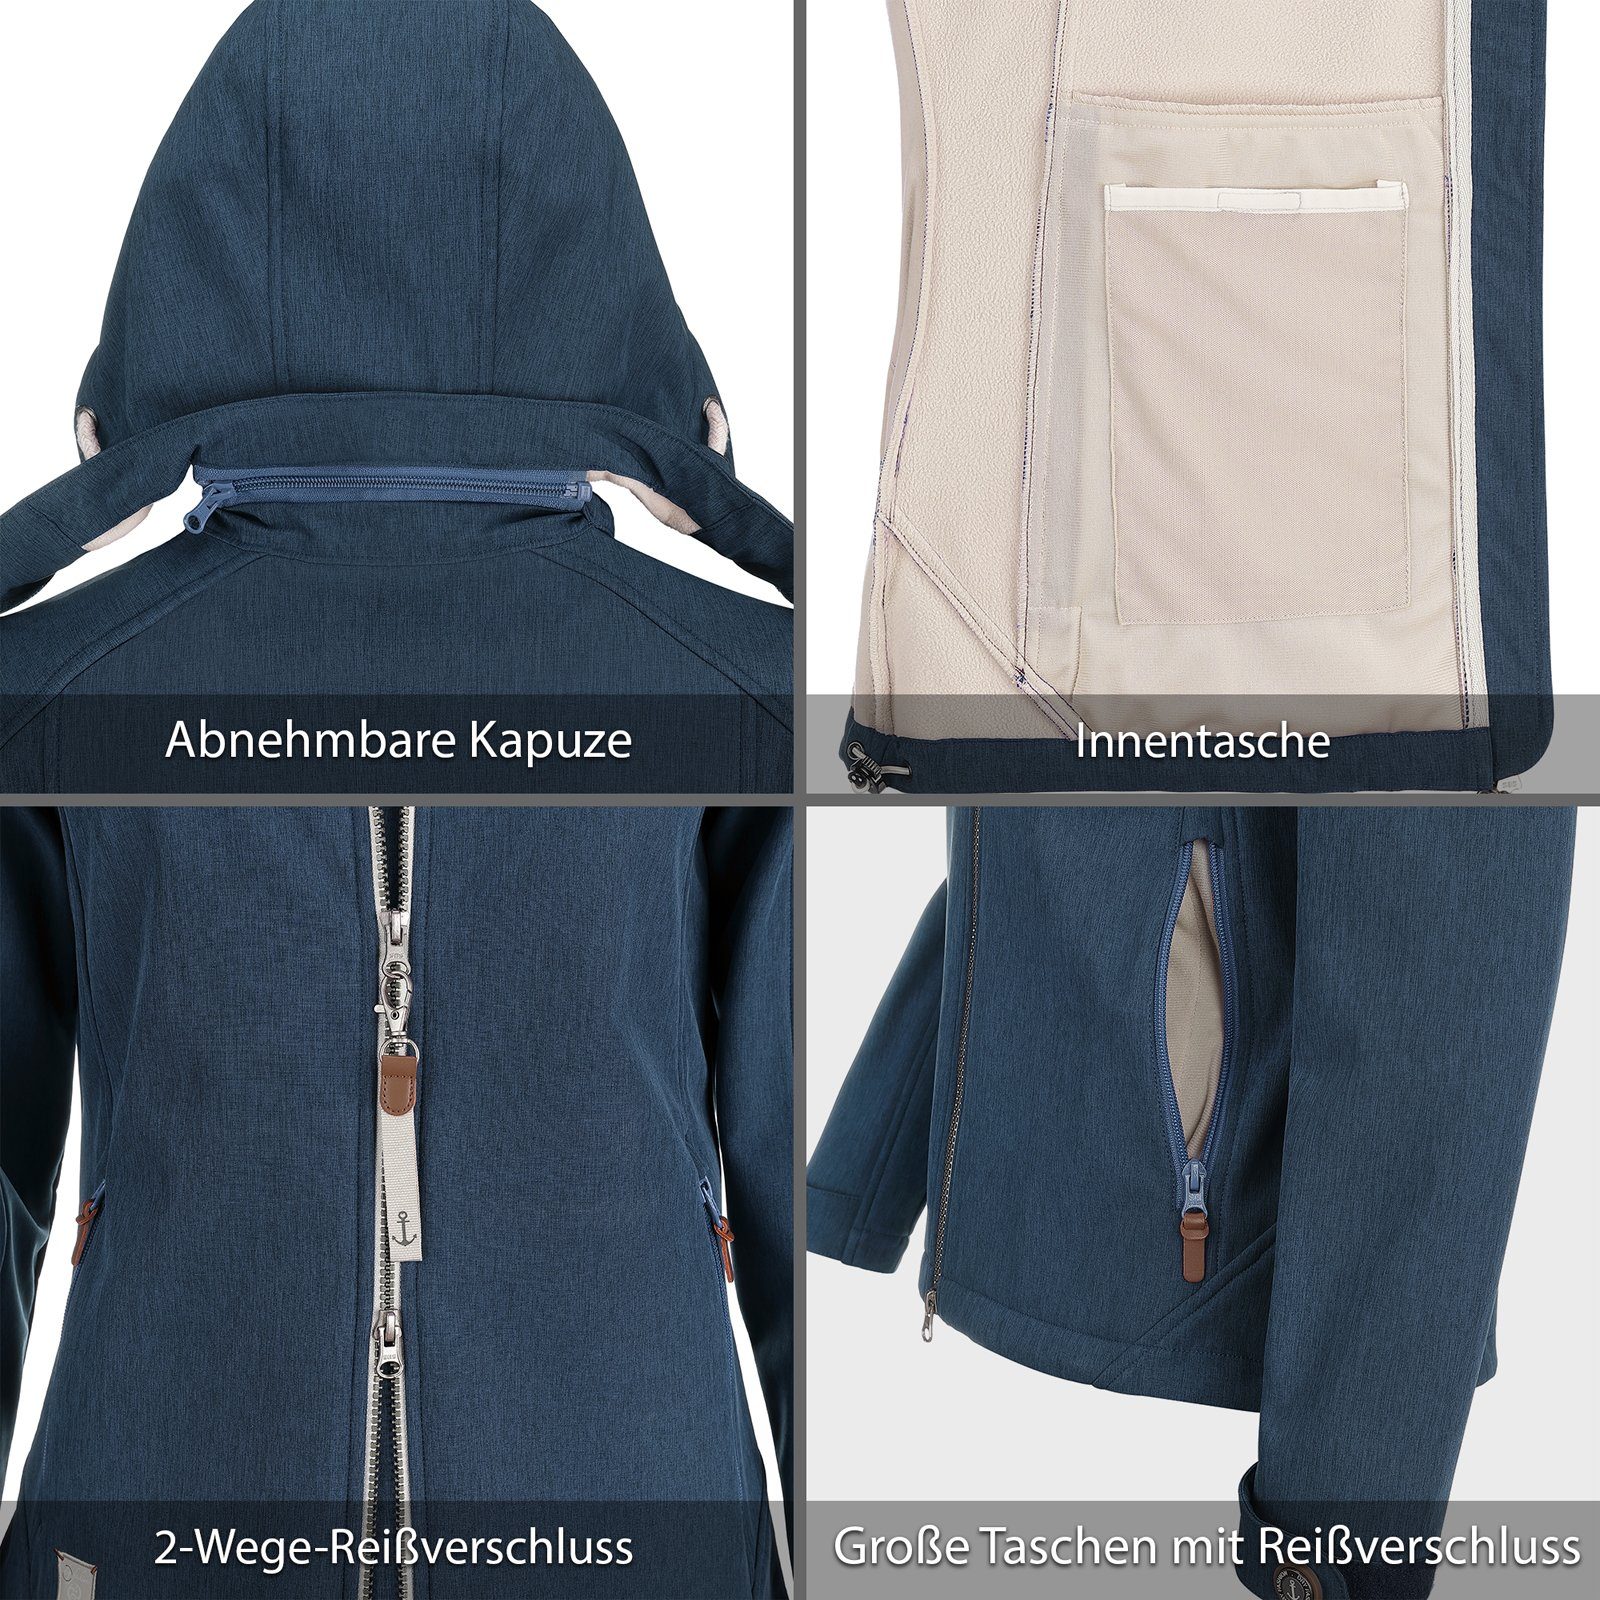 Dry Fashion Softshelljacke Damen Jacke Kapuze Damp - melange mit wasserabweisend meliert atmungsaktiv & navy